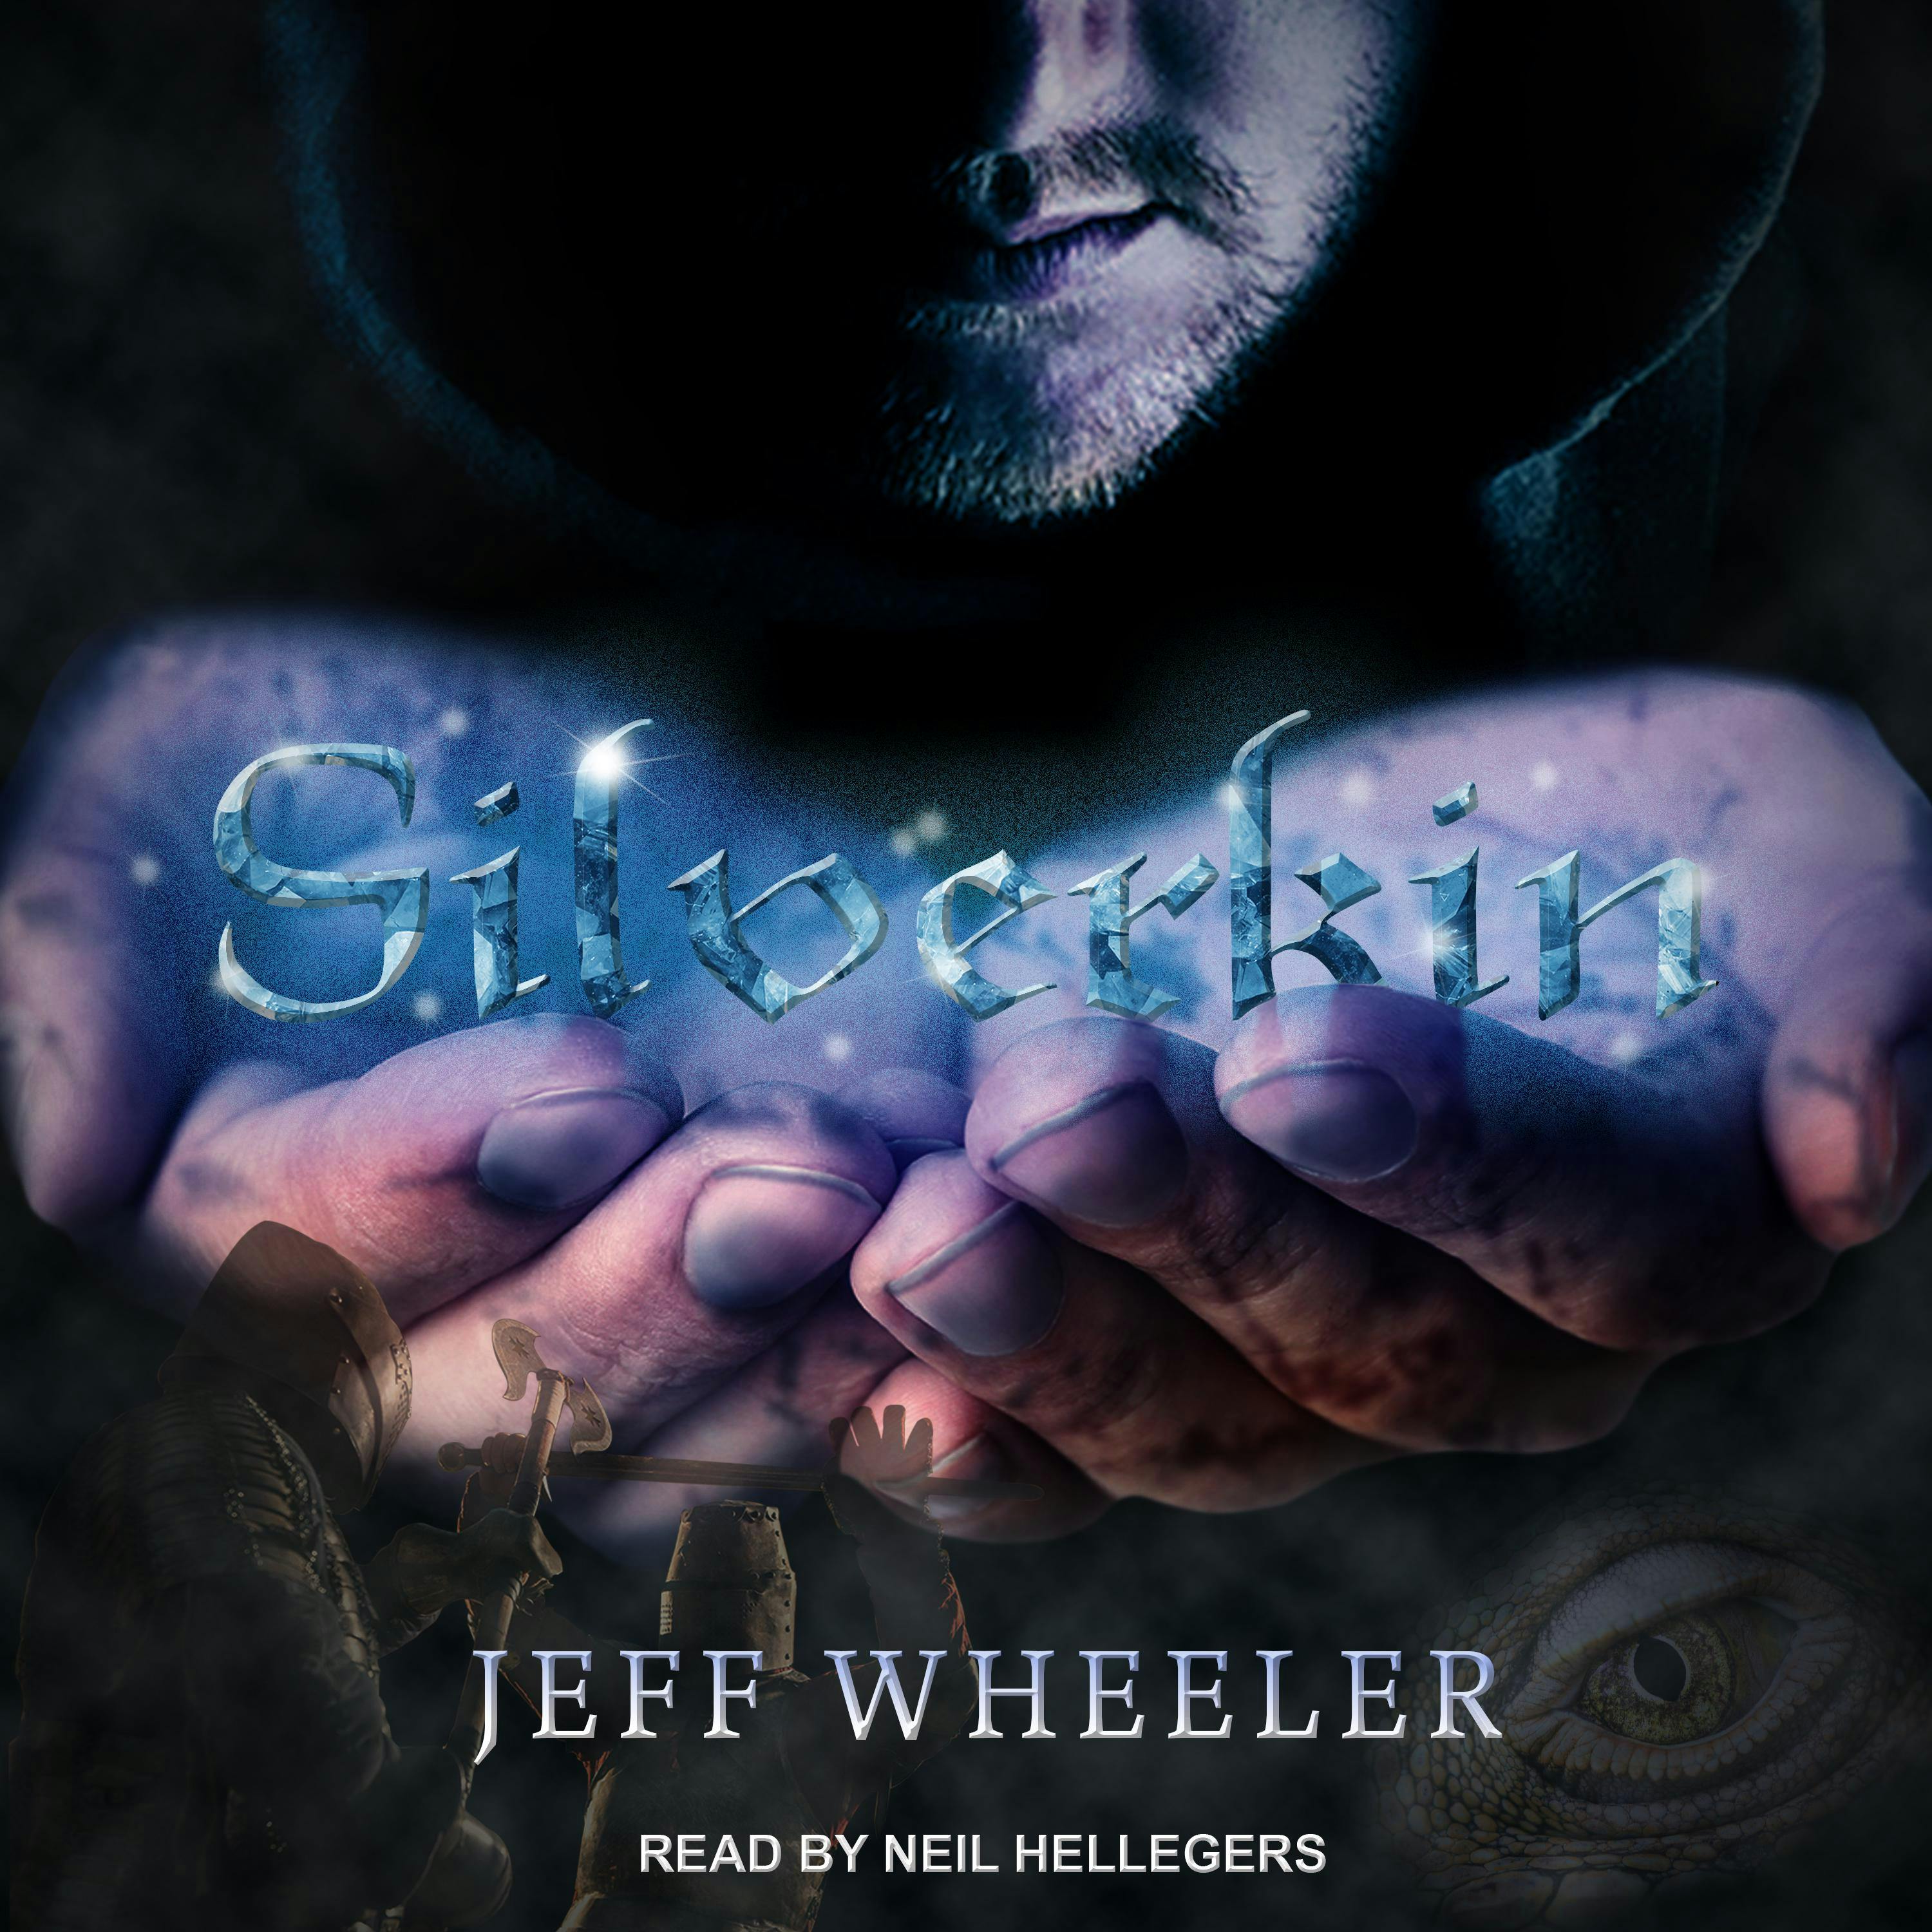 Silverkin - Jeff Wheeler